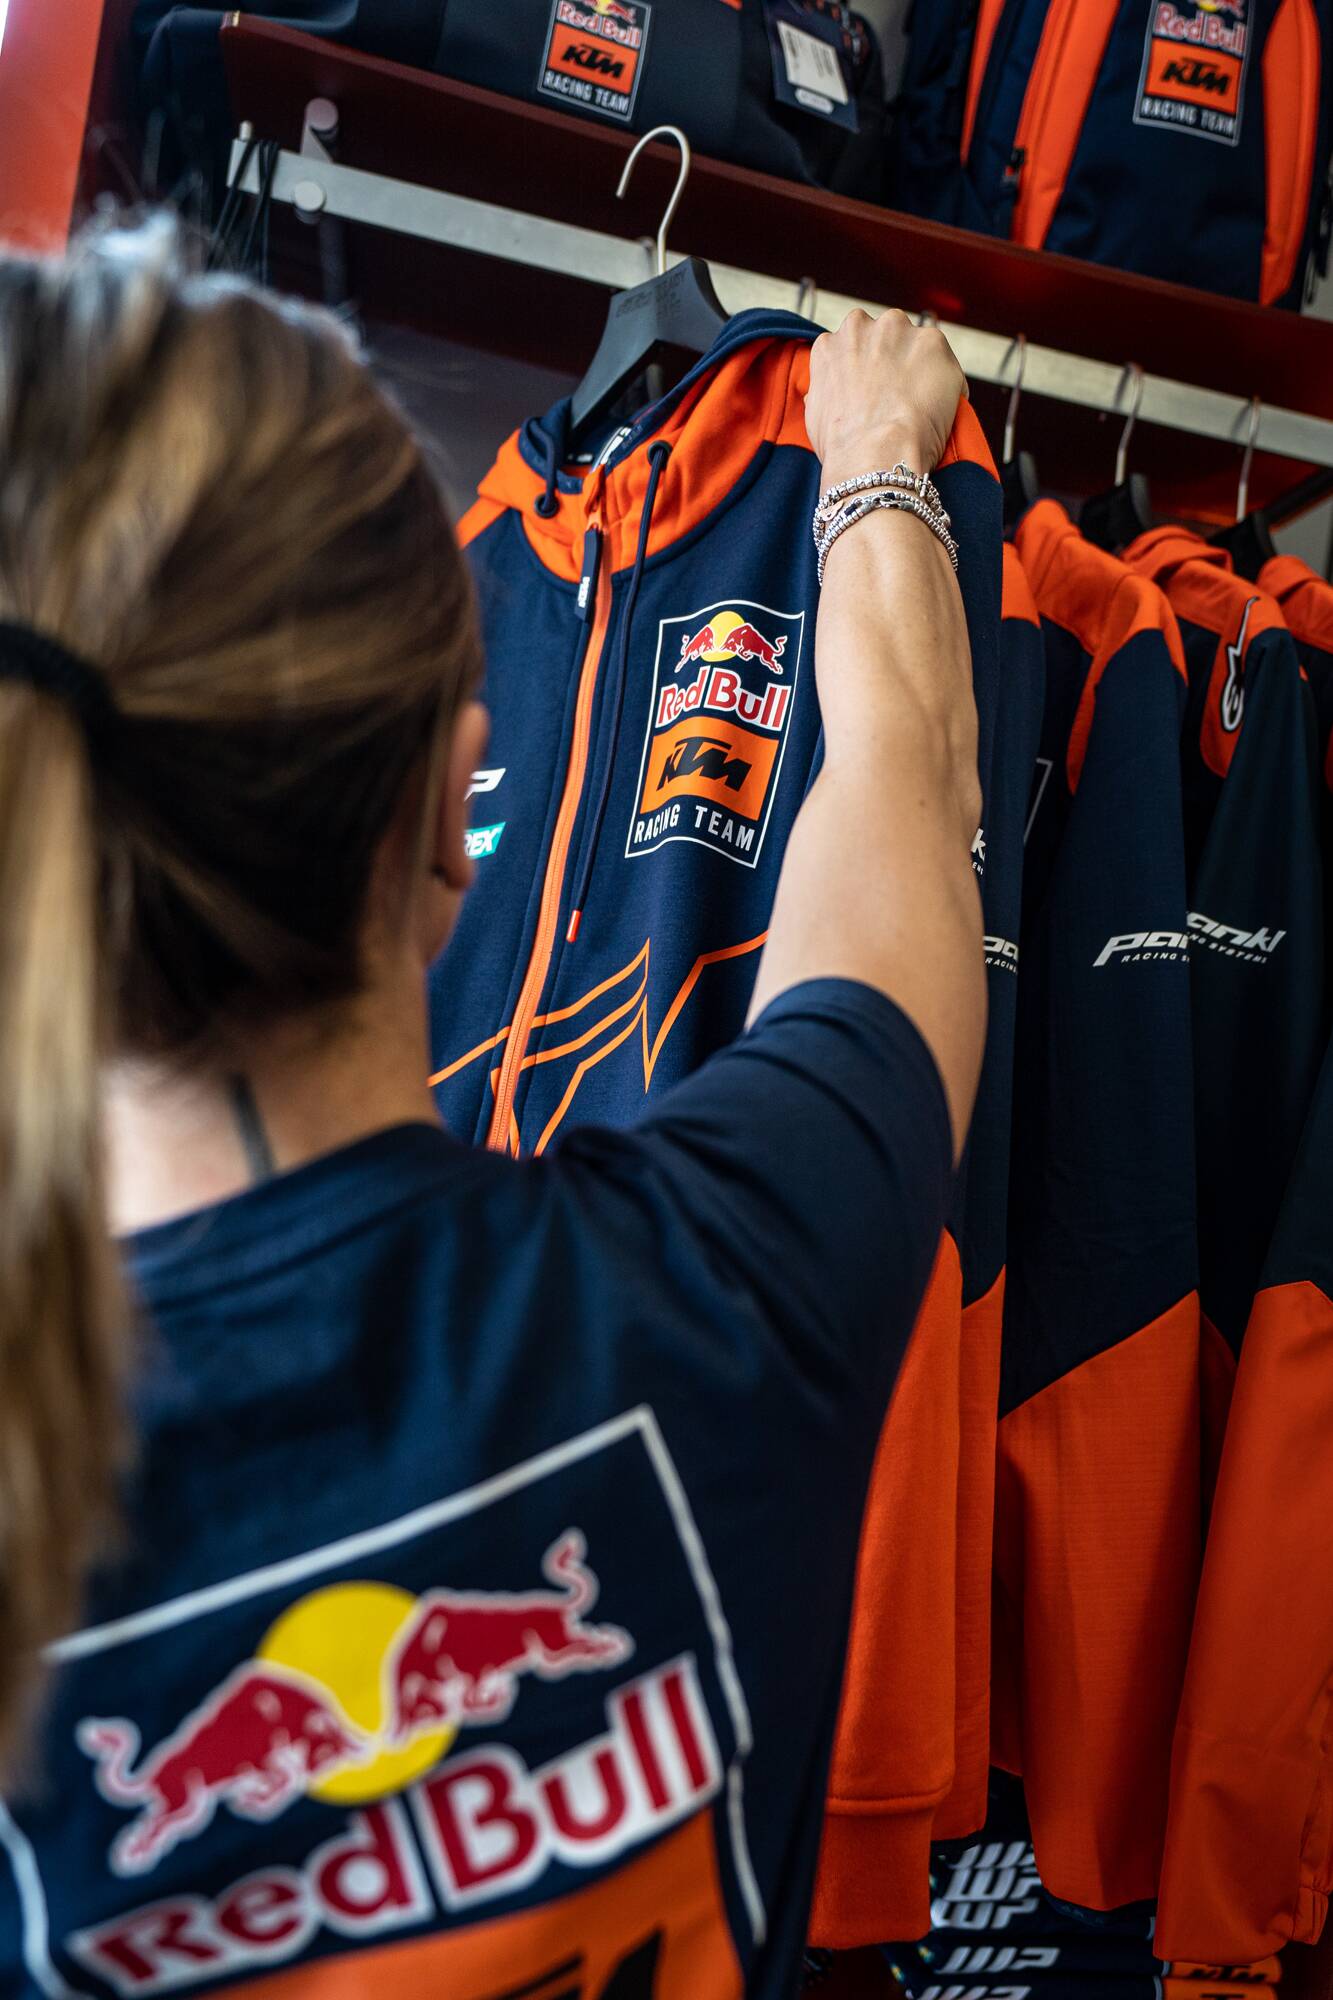 Lifestyle KTM Red Bull collection - Blog & News - KTM Farioli